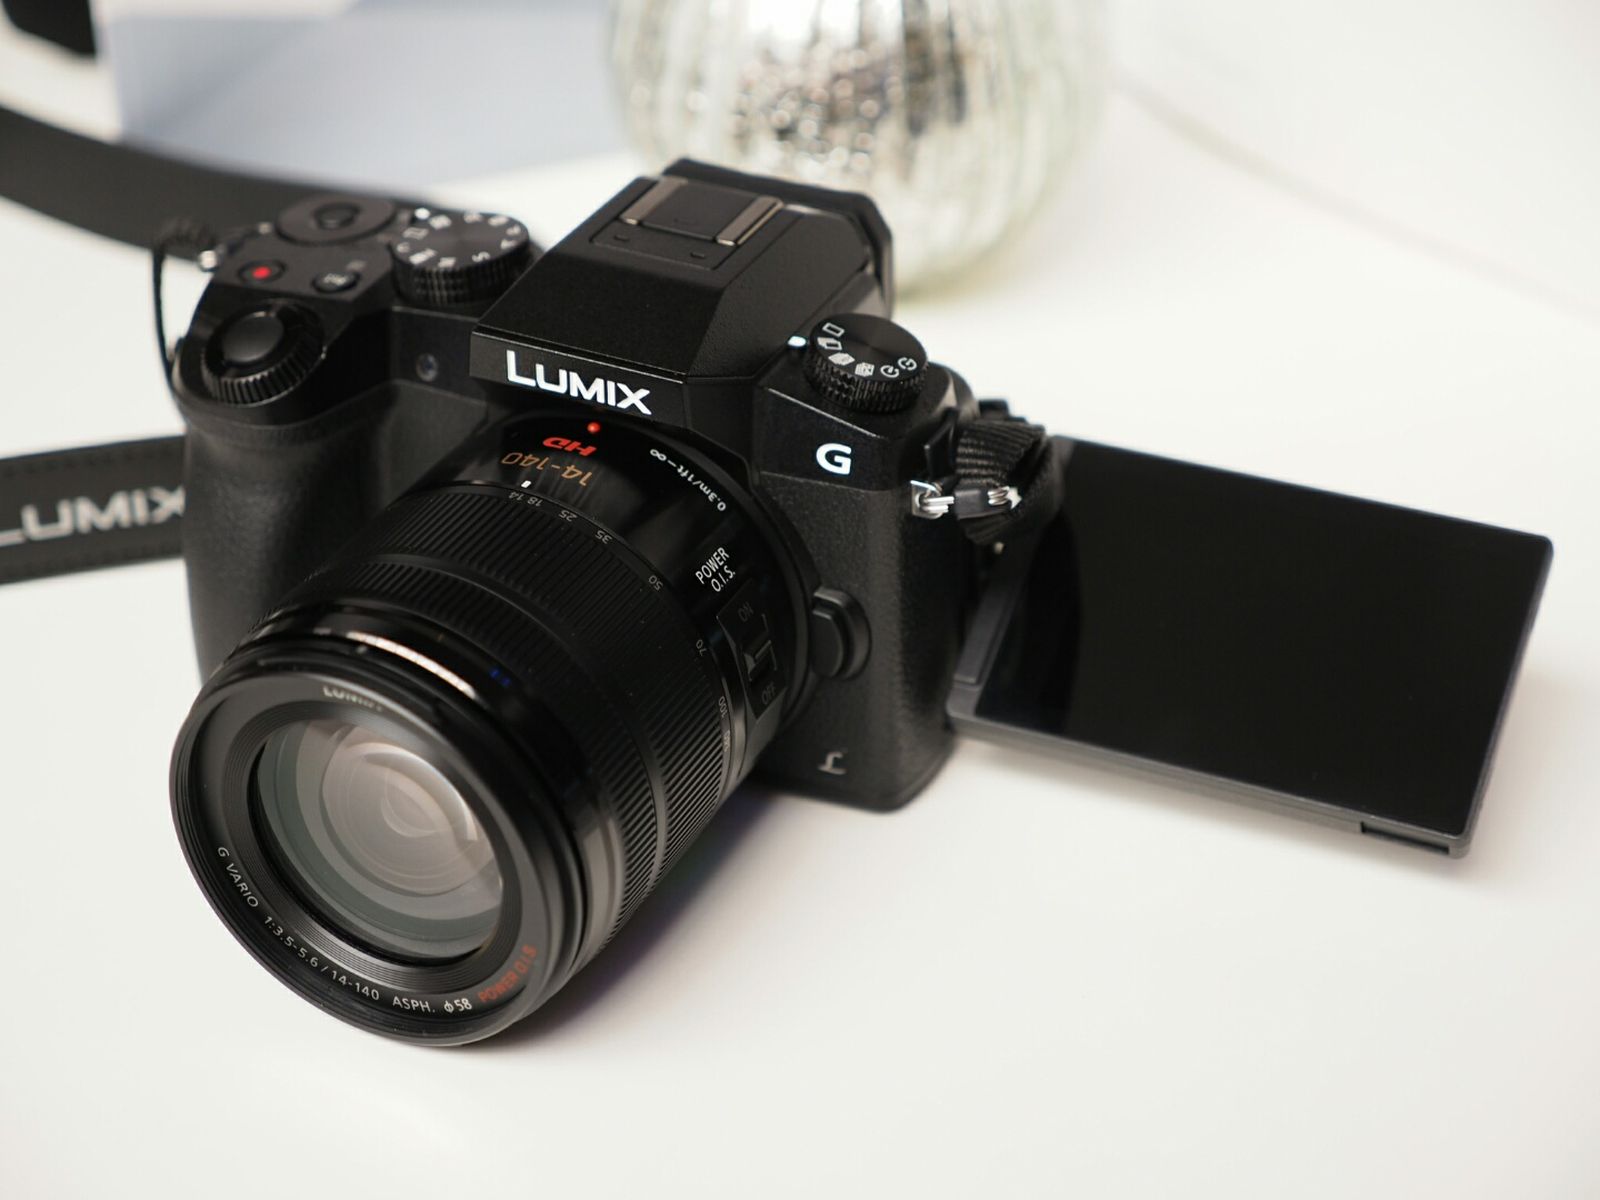 Panasonic LUMIX Cameras Receive New Firmware - Download Now